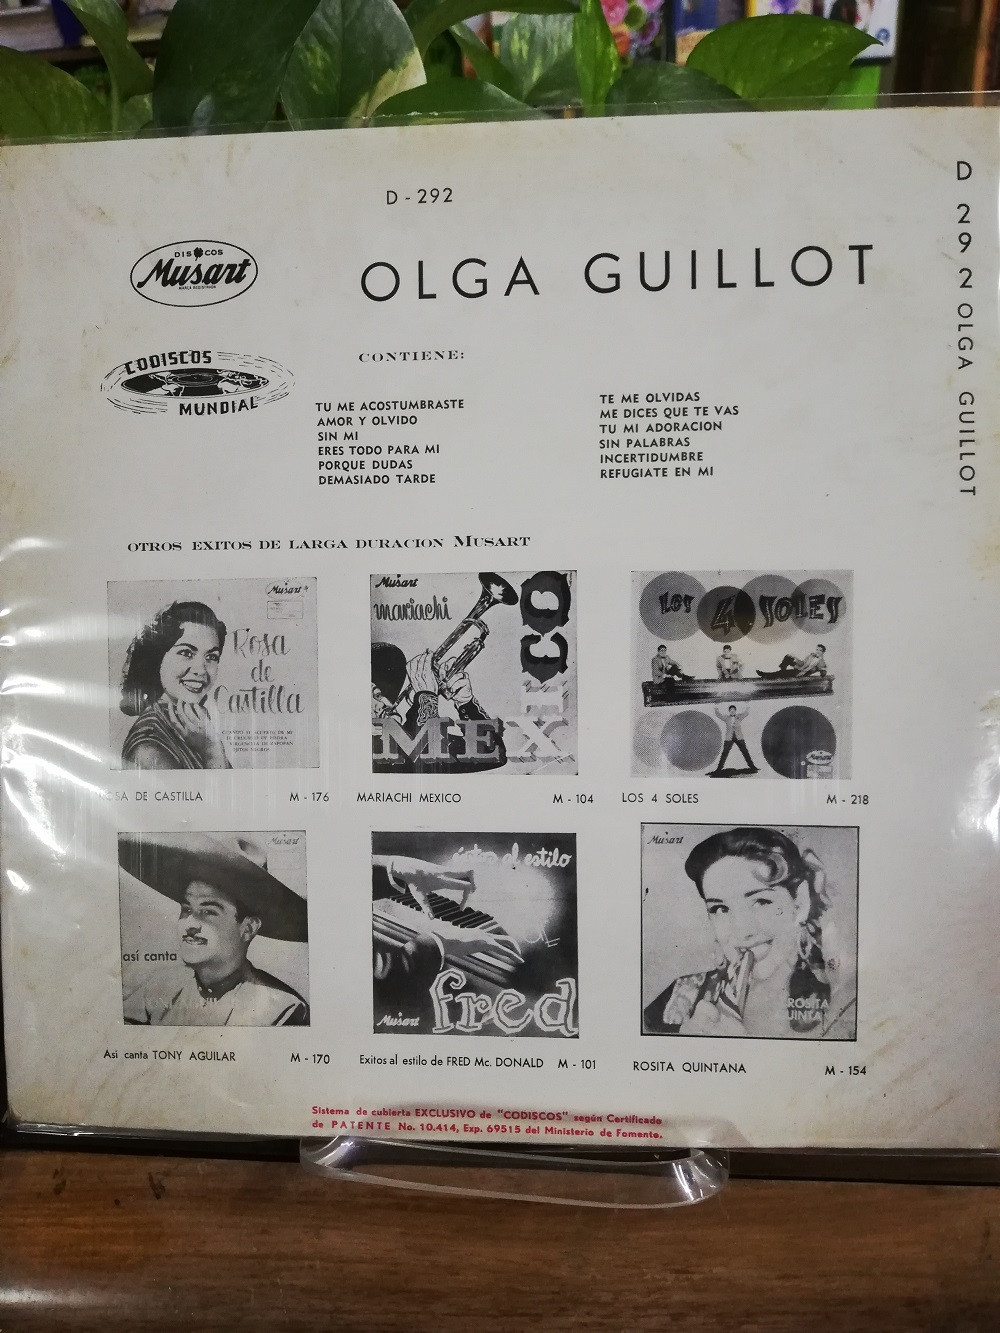 Imagen LP OLGA GUILLOT - OLGA GUILLOT 2